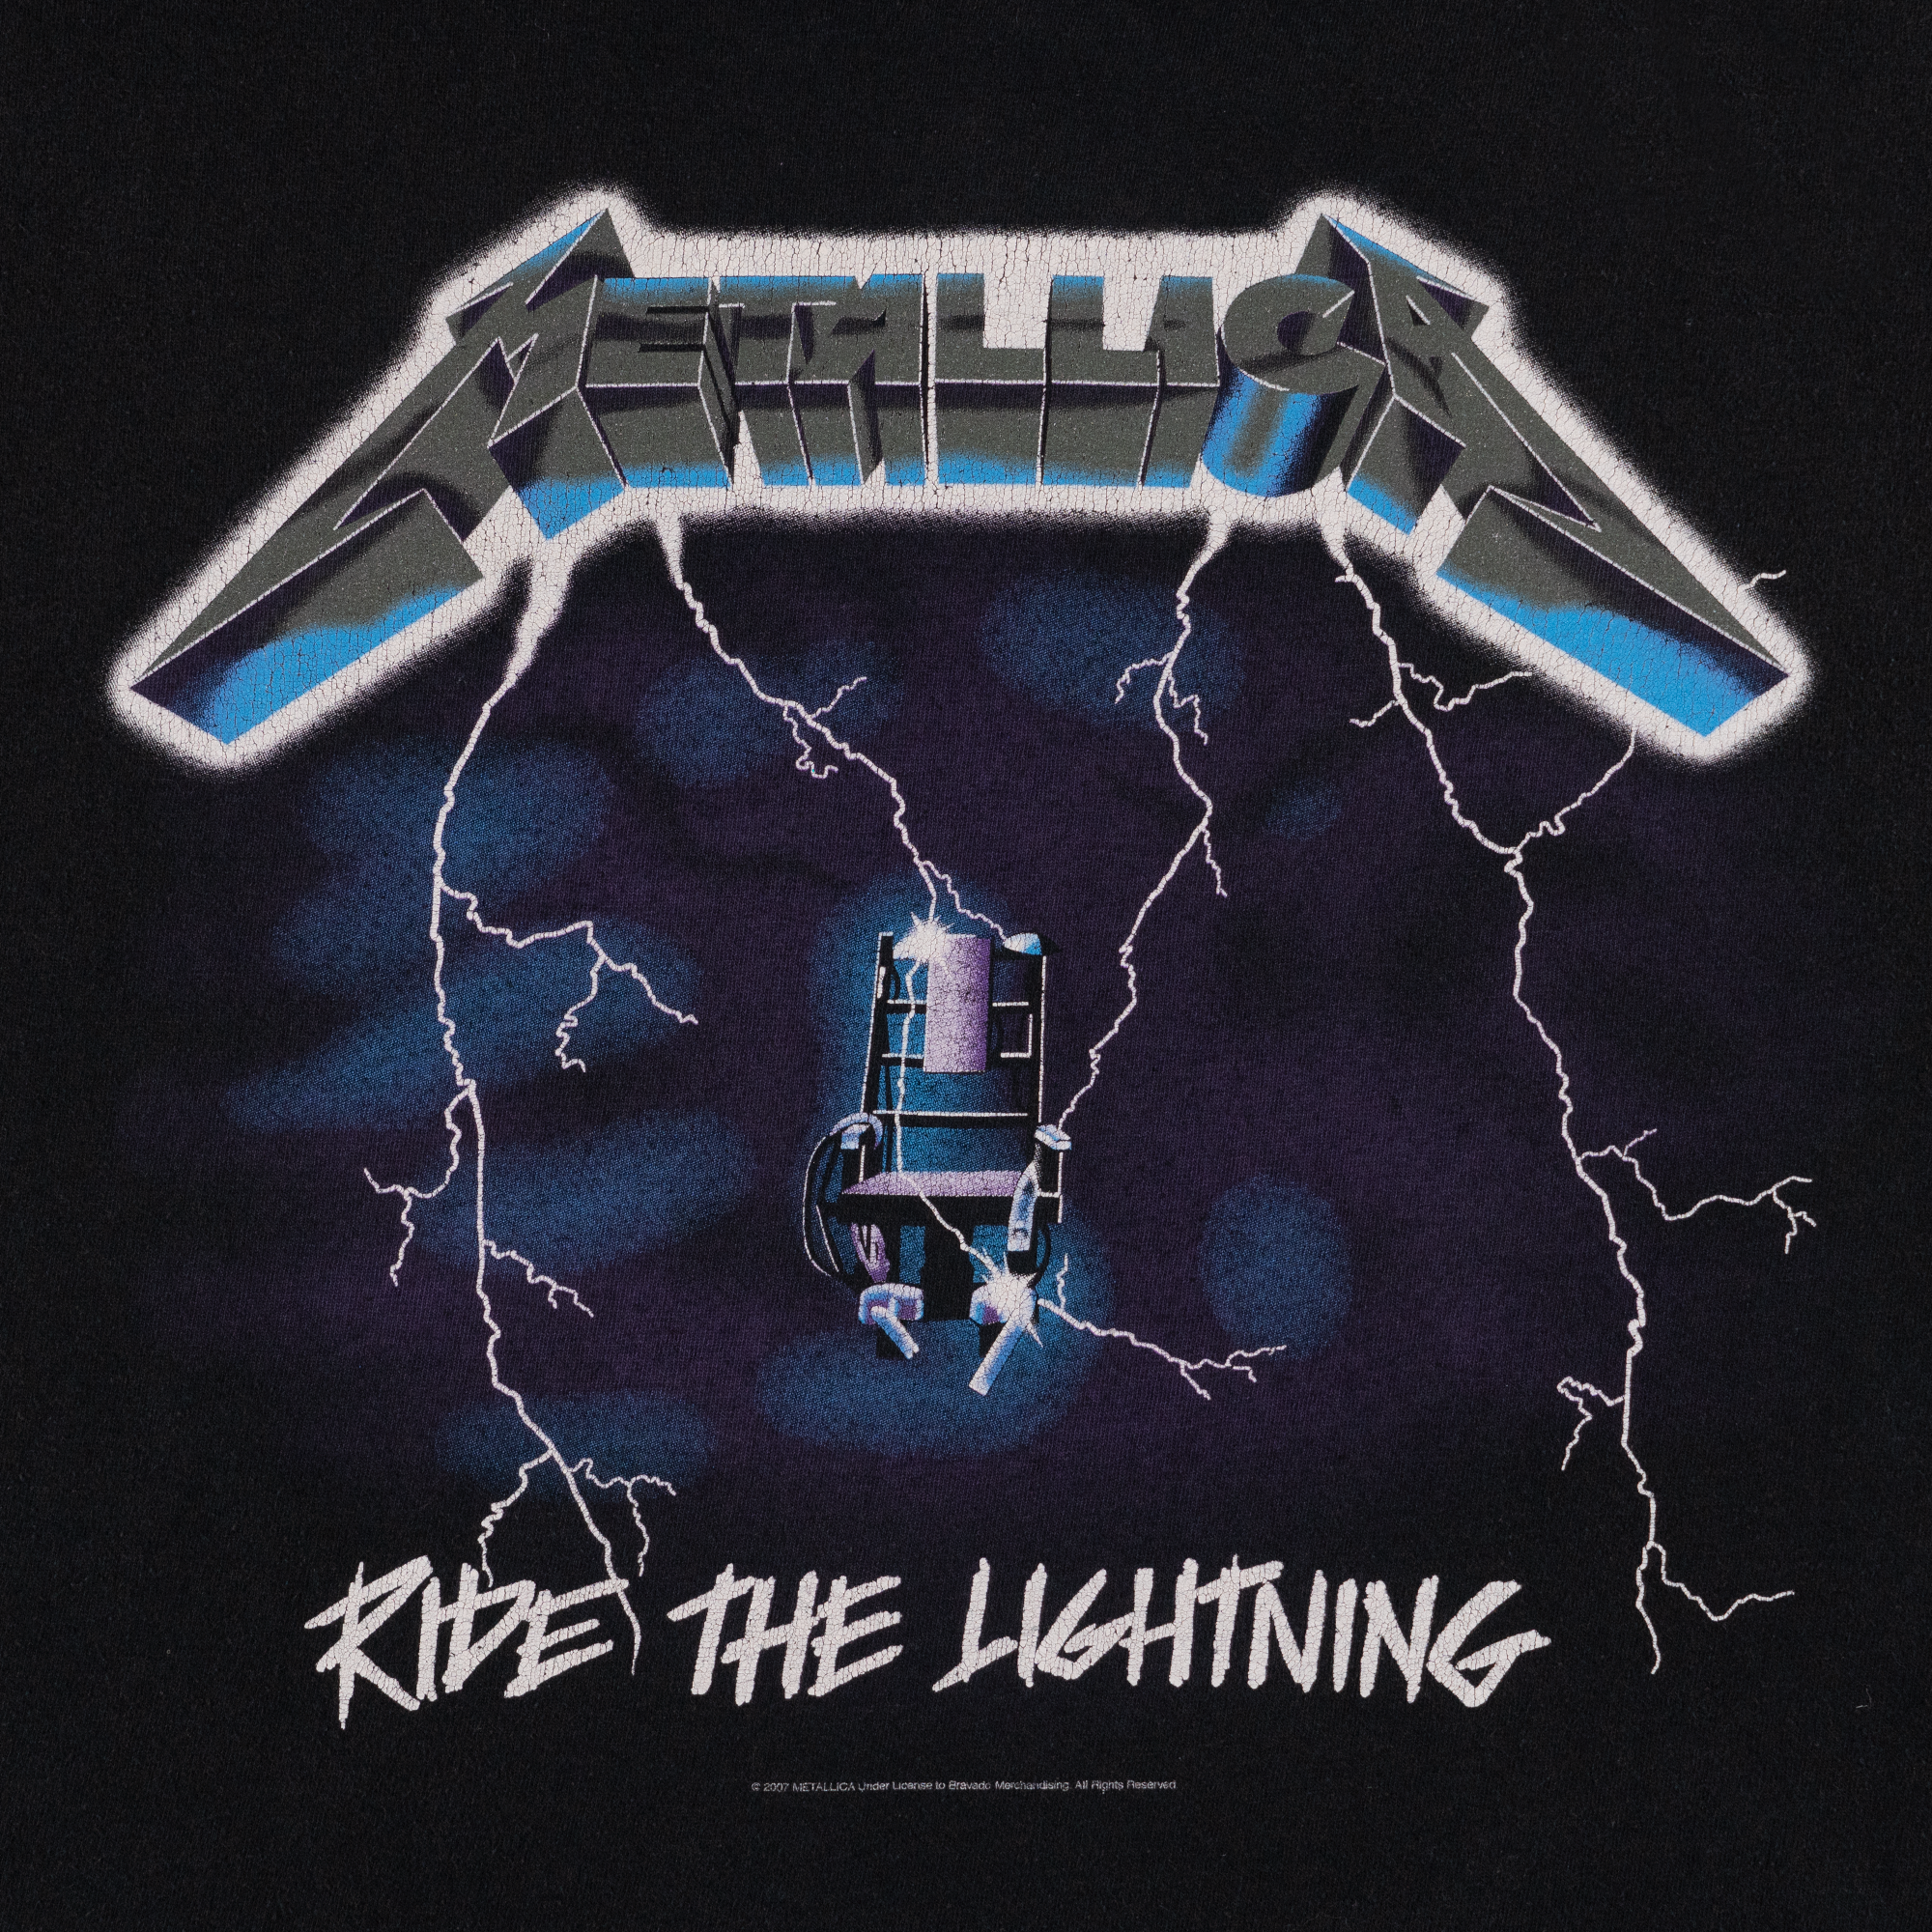 Metallica Ride The Lightning 2007 Tee Black-PLUS